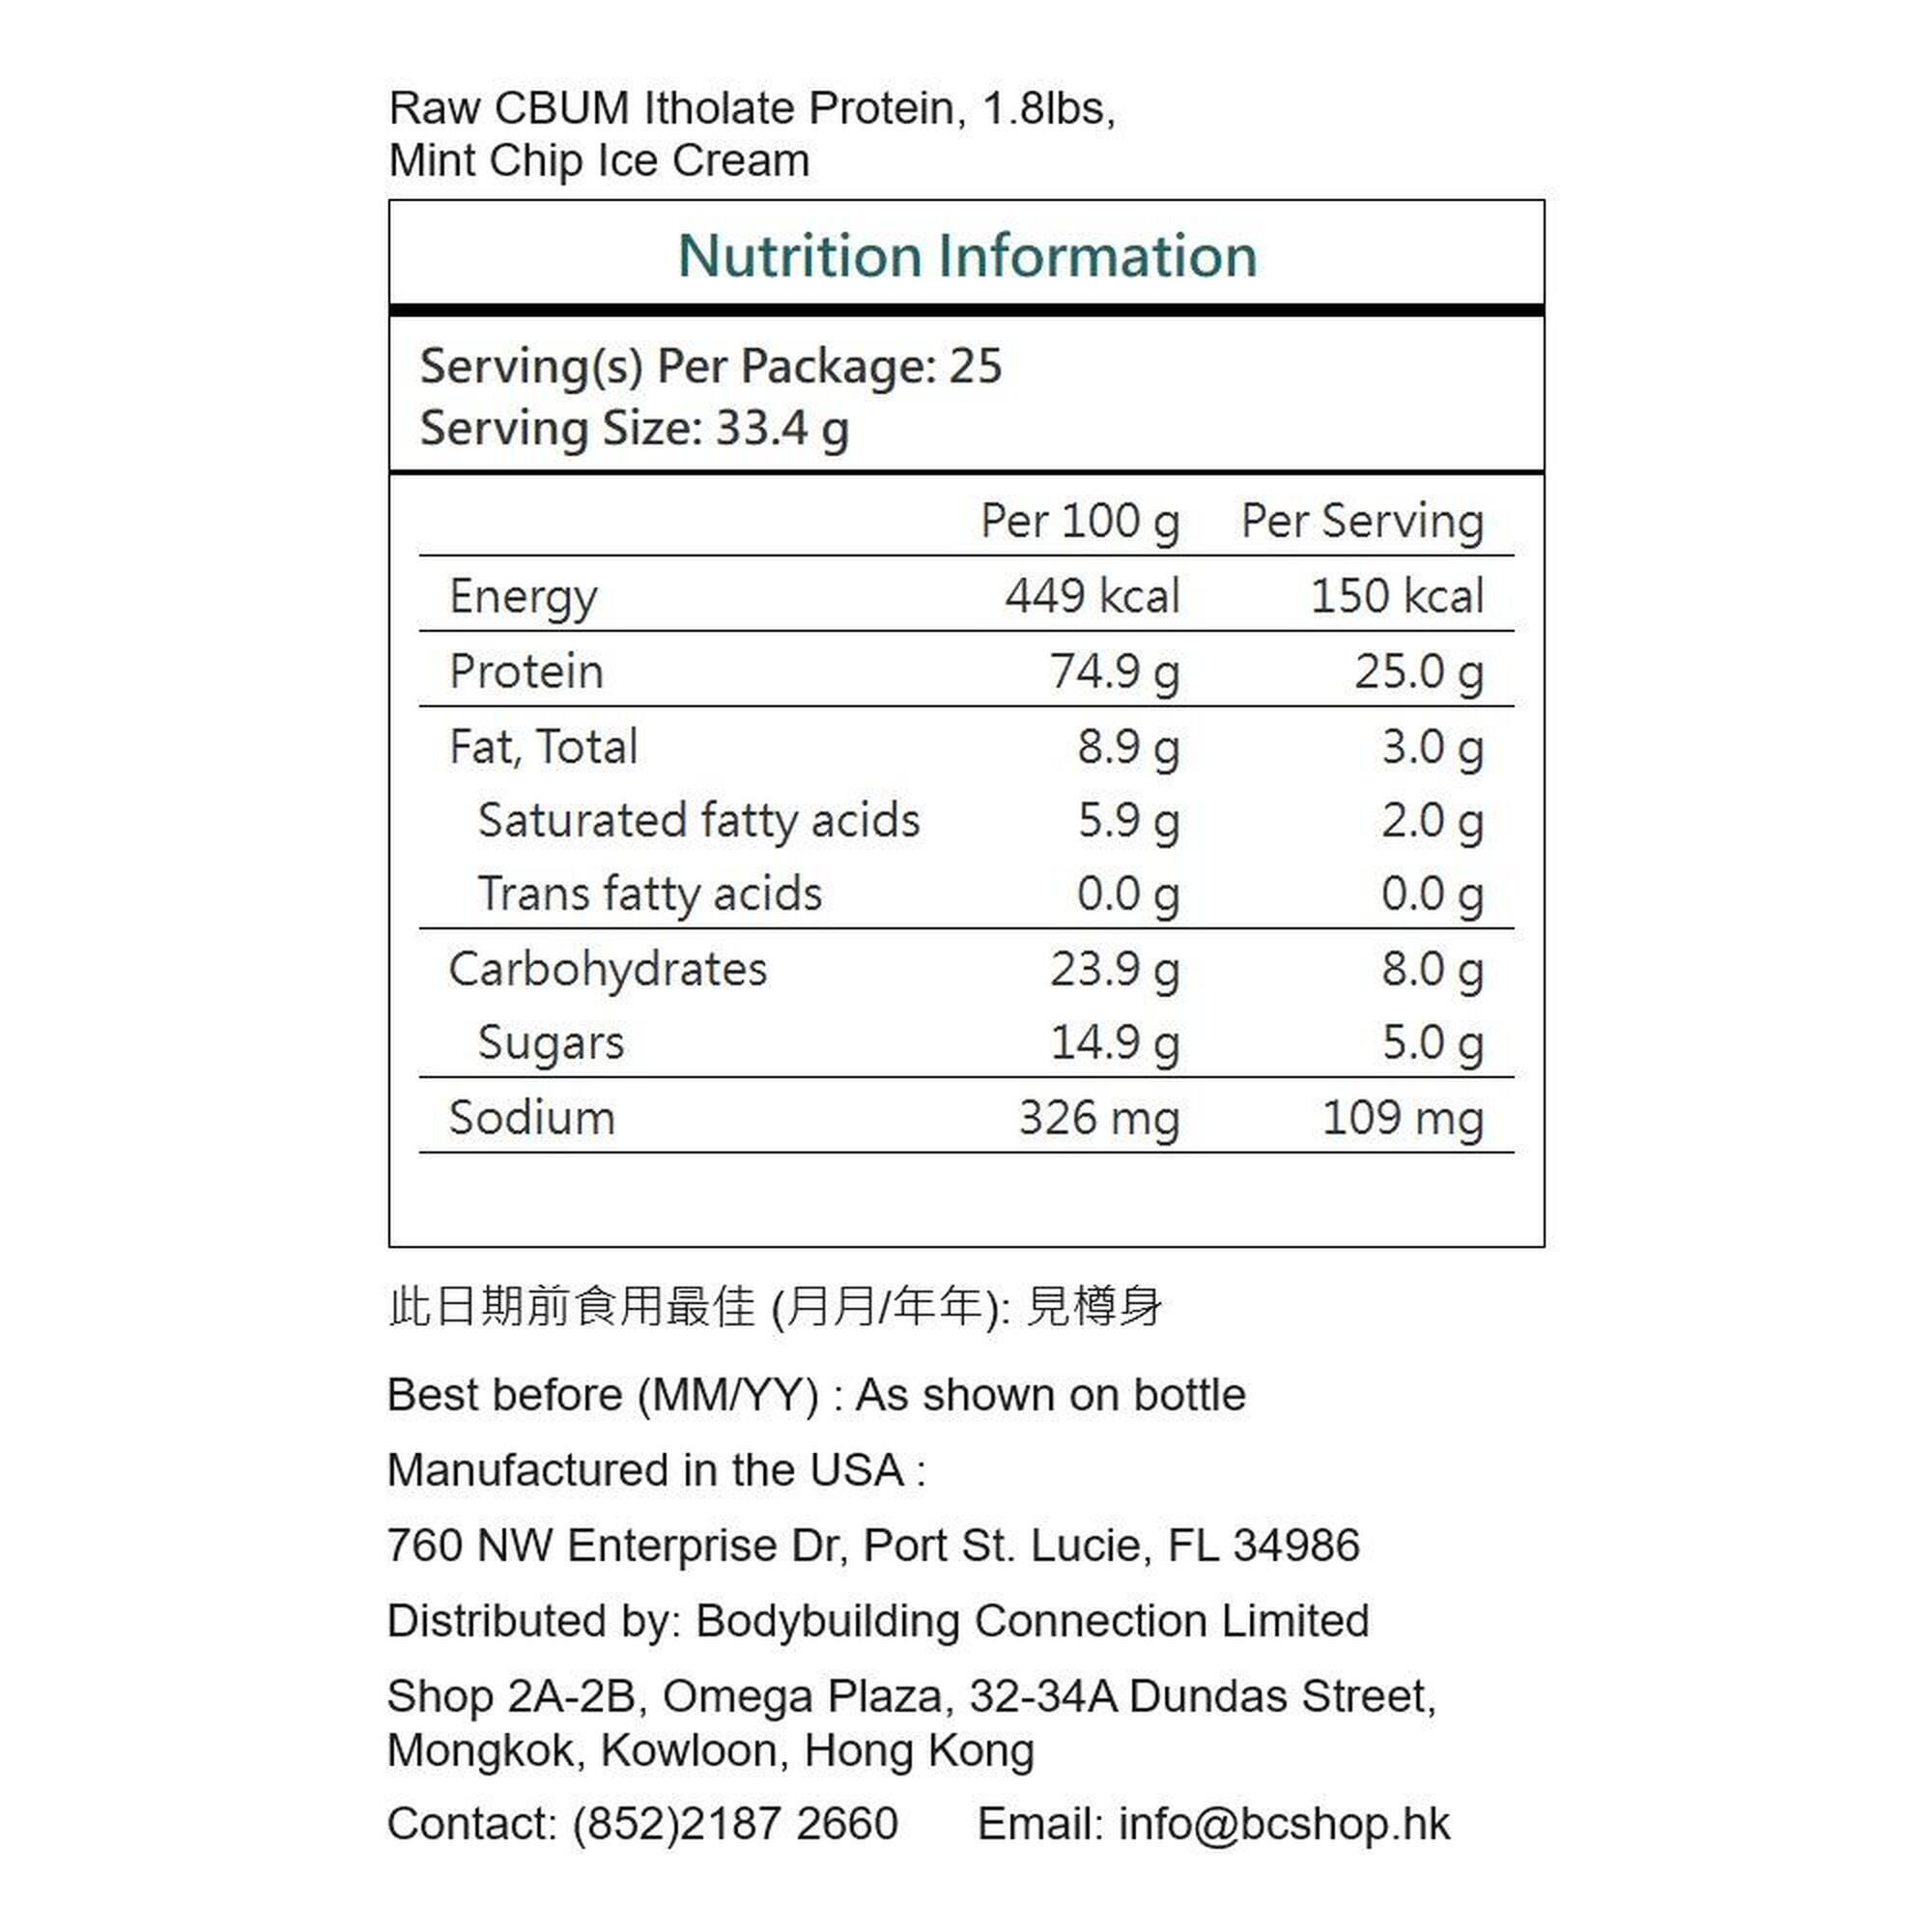 CBUM Itholate Protein (1.8lbs) - Mint Chip Ice Cream